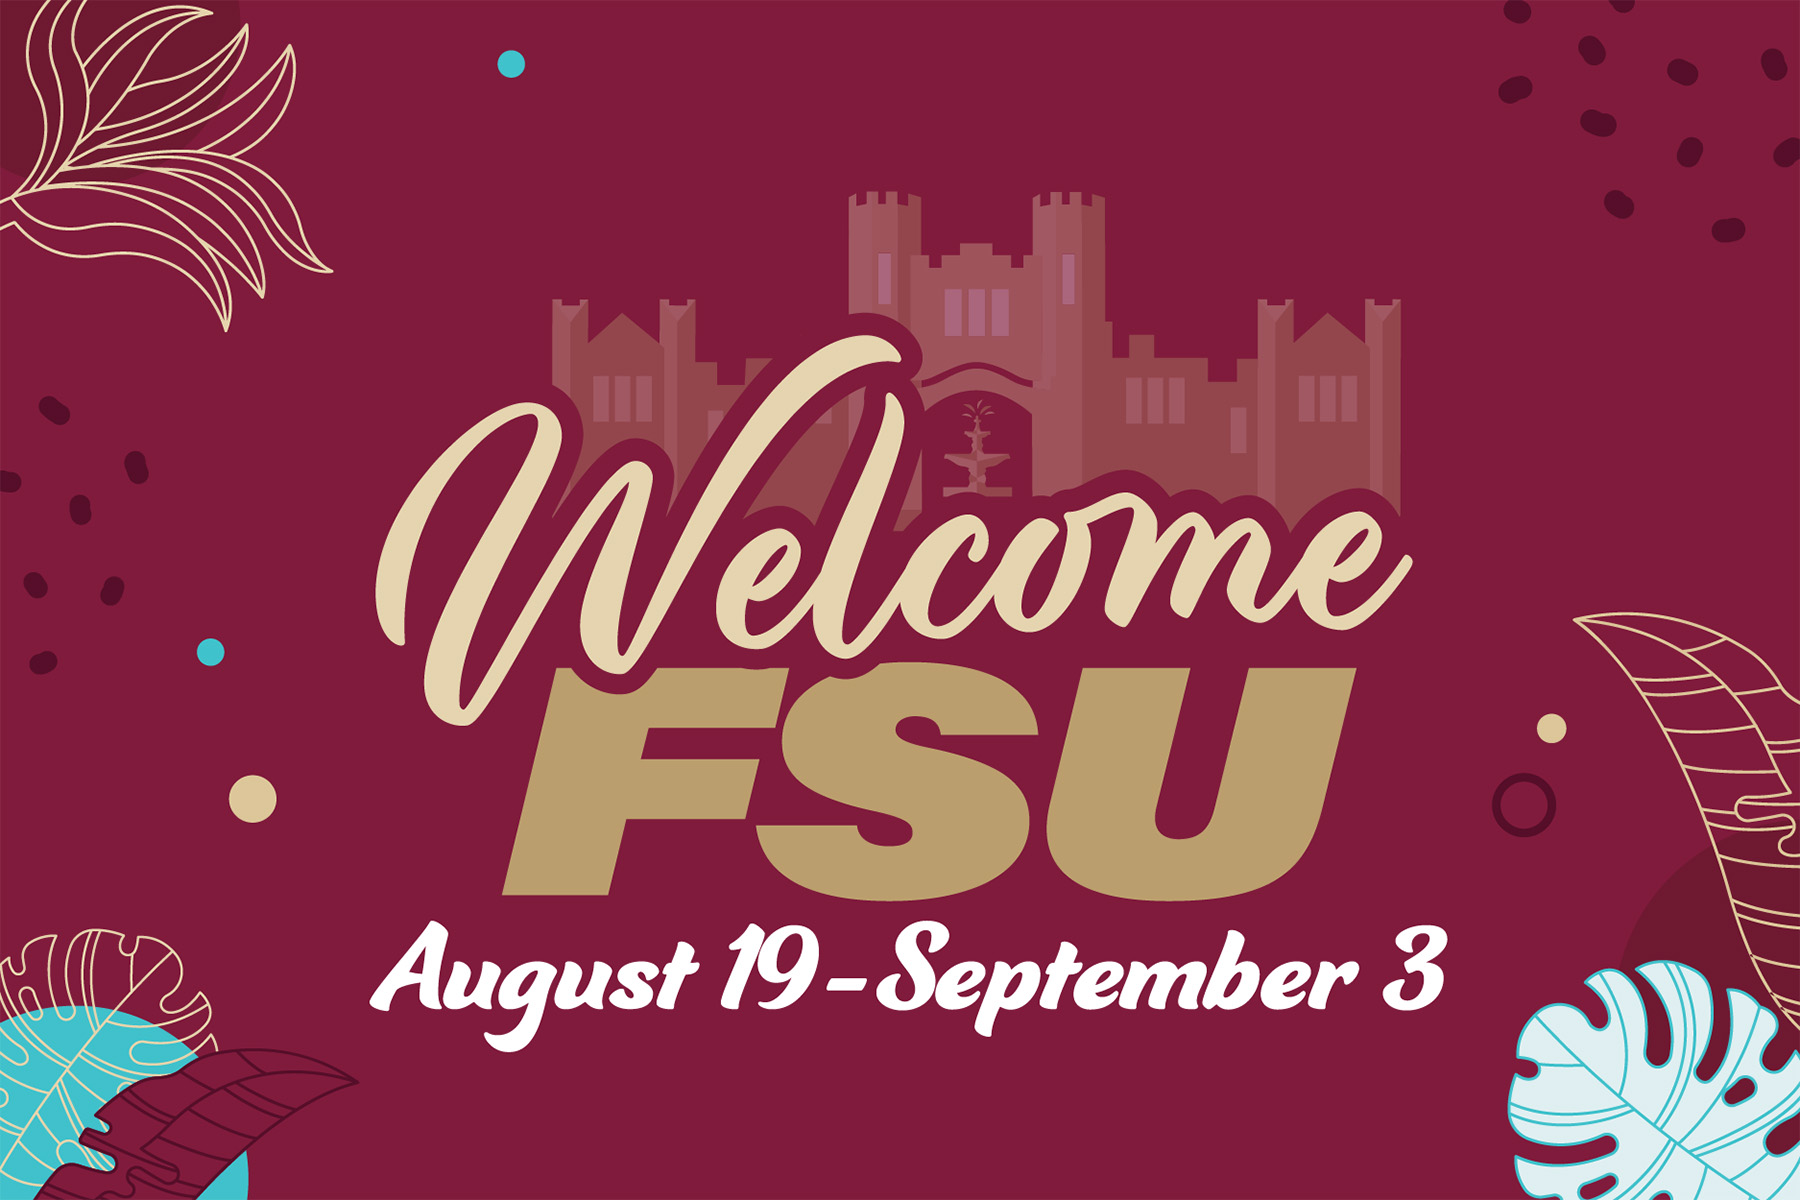 FSU’ events and programs kick off fall semester Florida